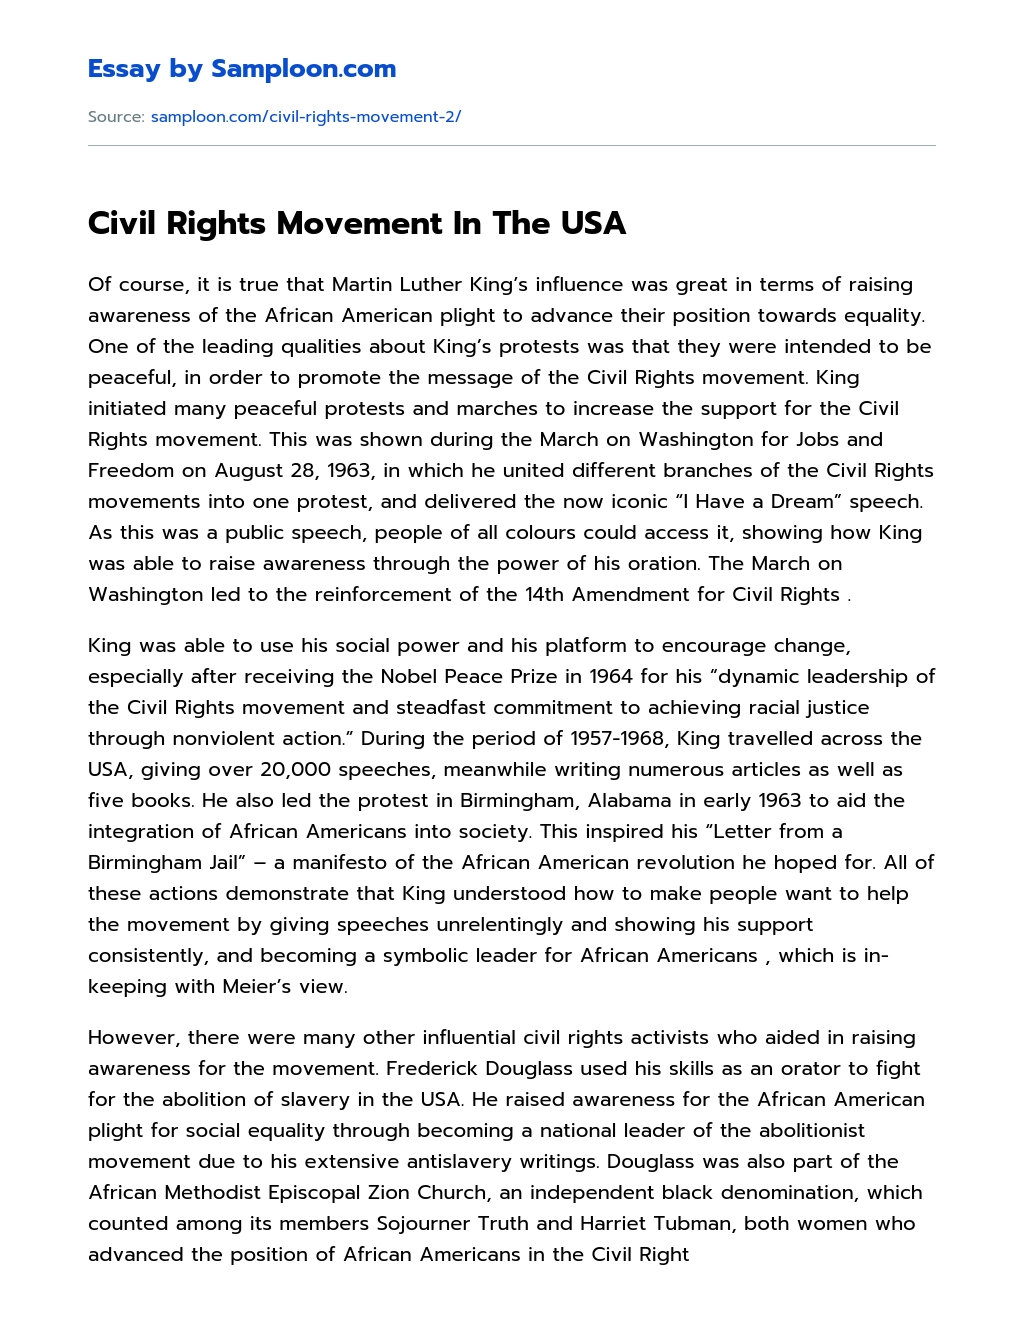 Civil Rights Movement In The USA essay